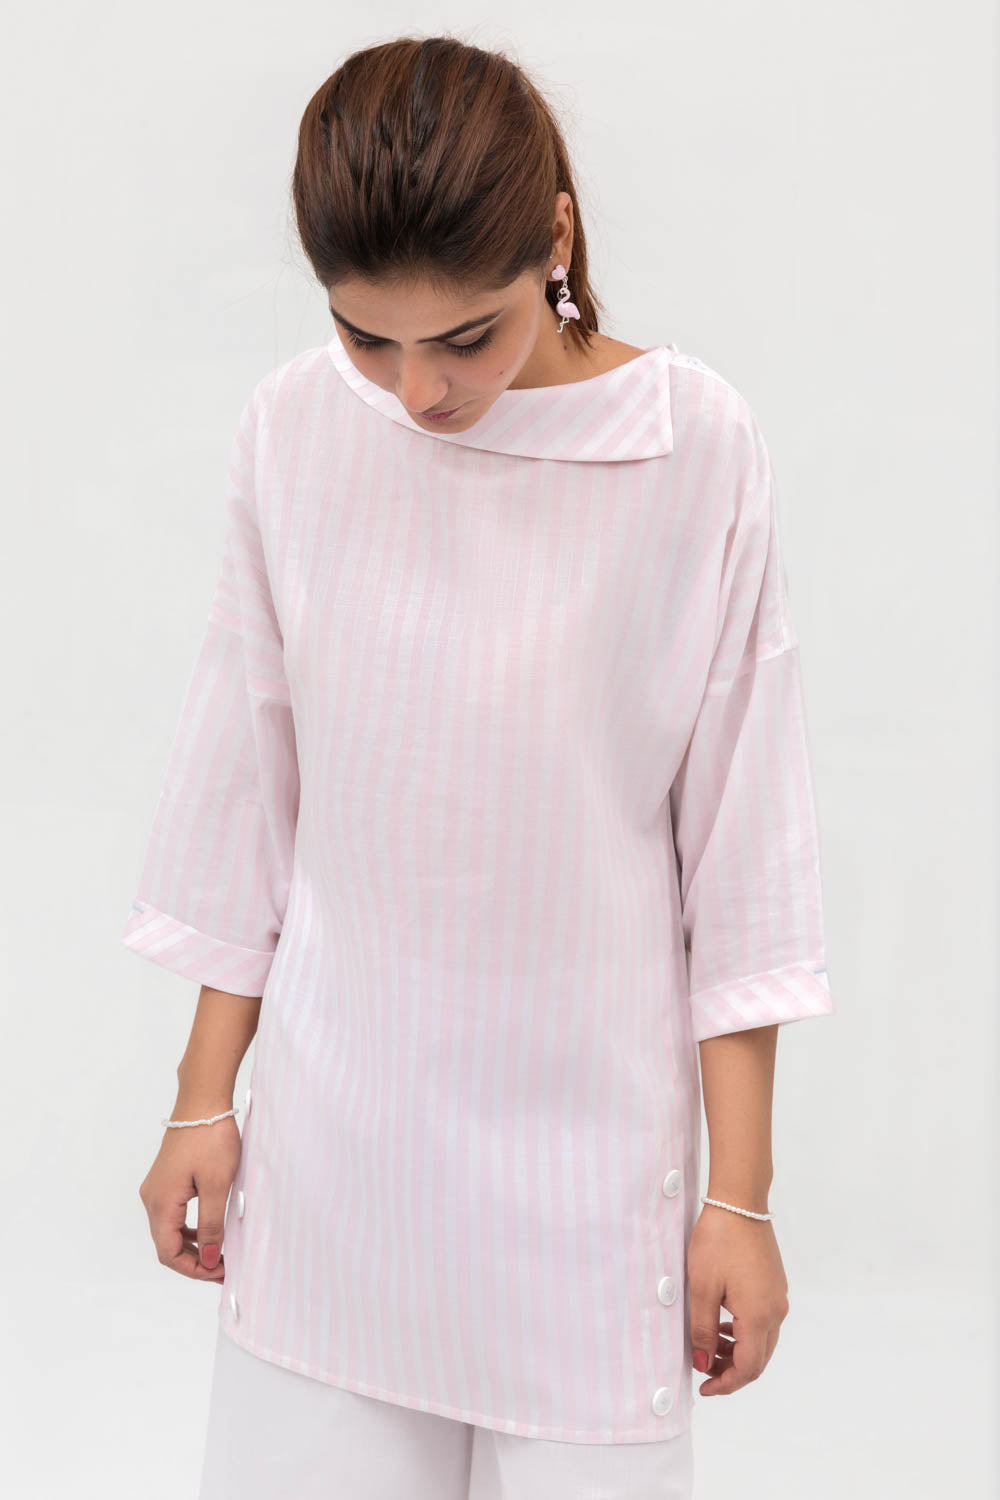 Pink Cowl Neck Long Length Fusion Shirt - yesonline.pk